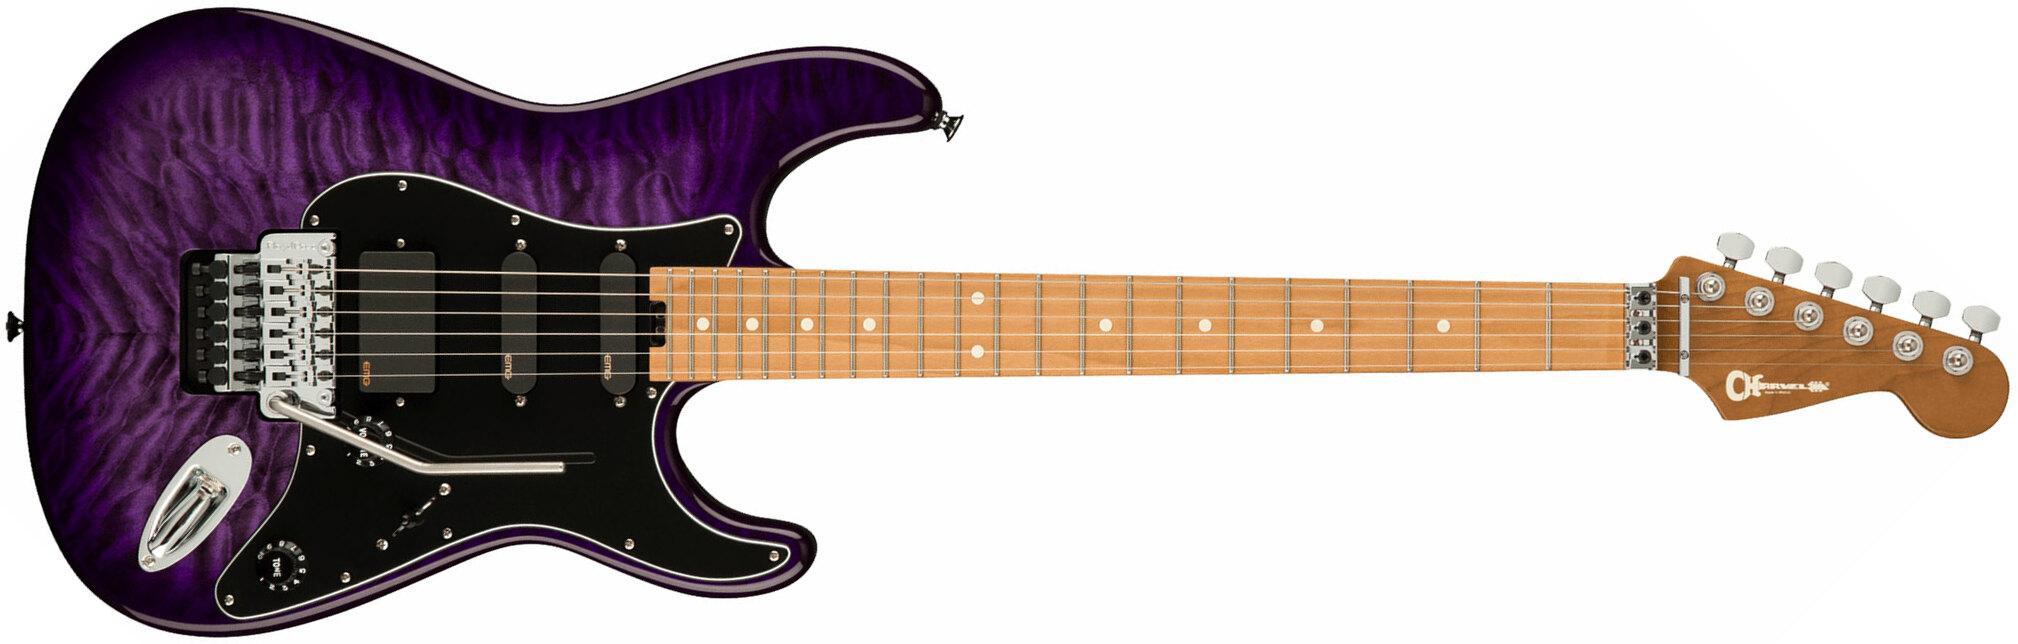 Charvel Marco Sfogli So Cal Style 1 Pro Mod Signature Hss Emg Fr Mn - Transparent Purple Burst - Guitarra eléctrica de autor - Main picture